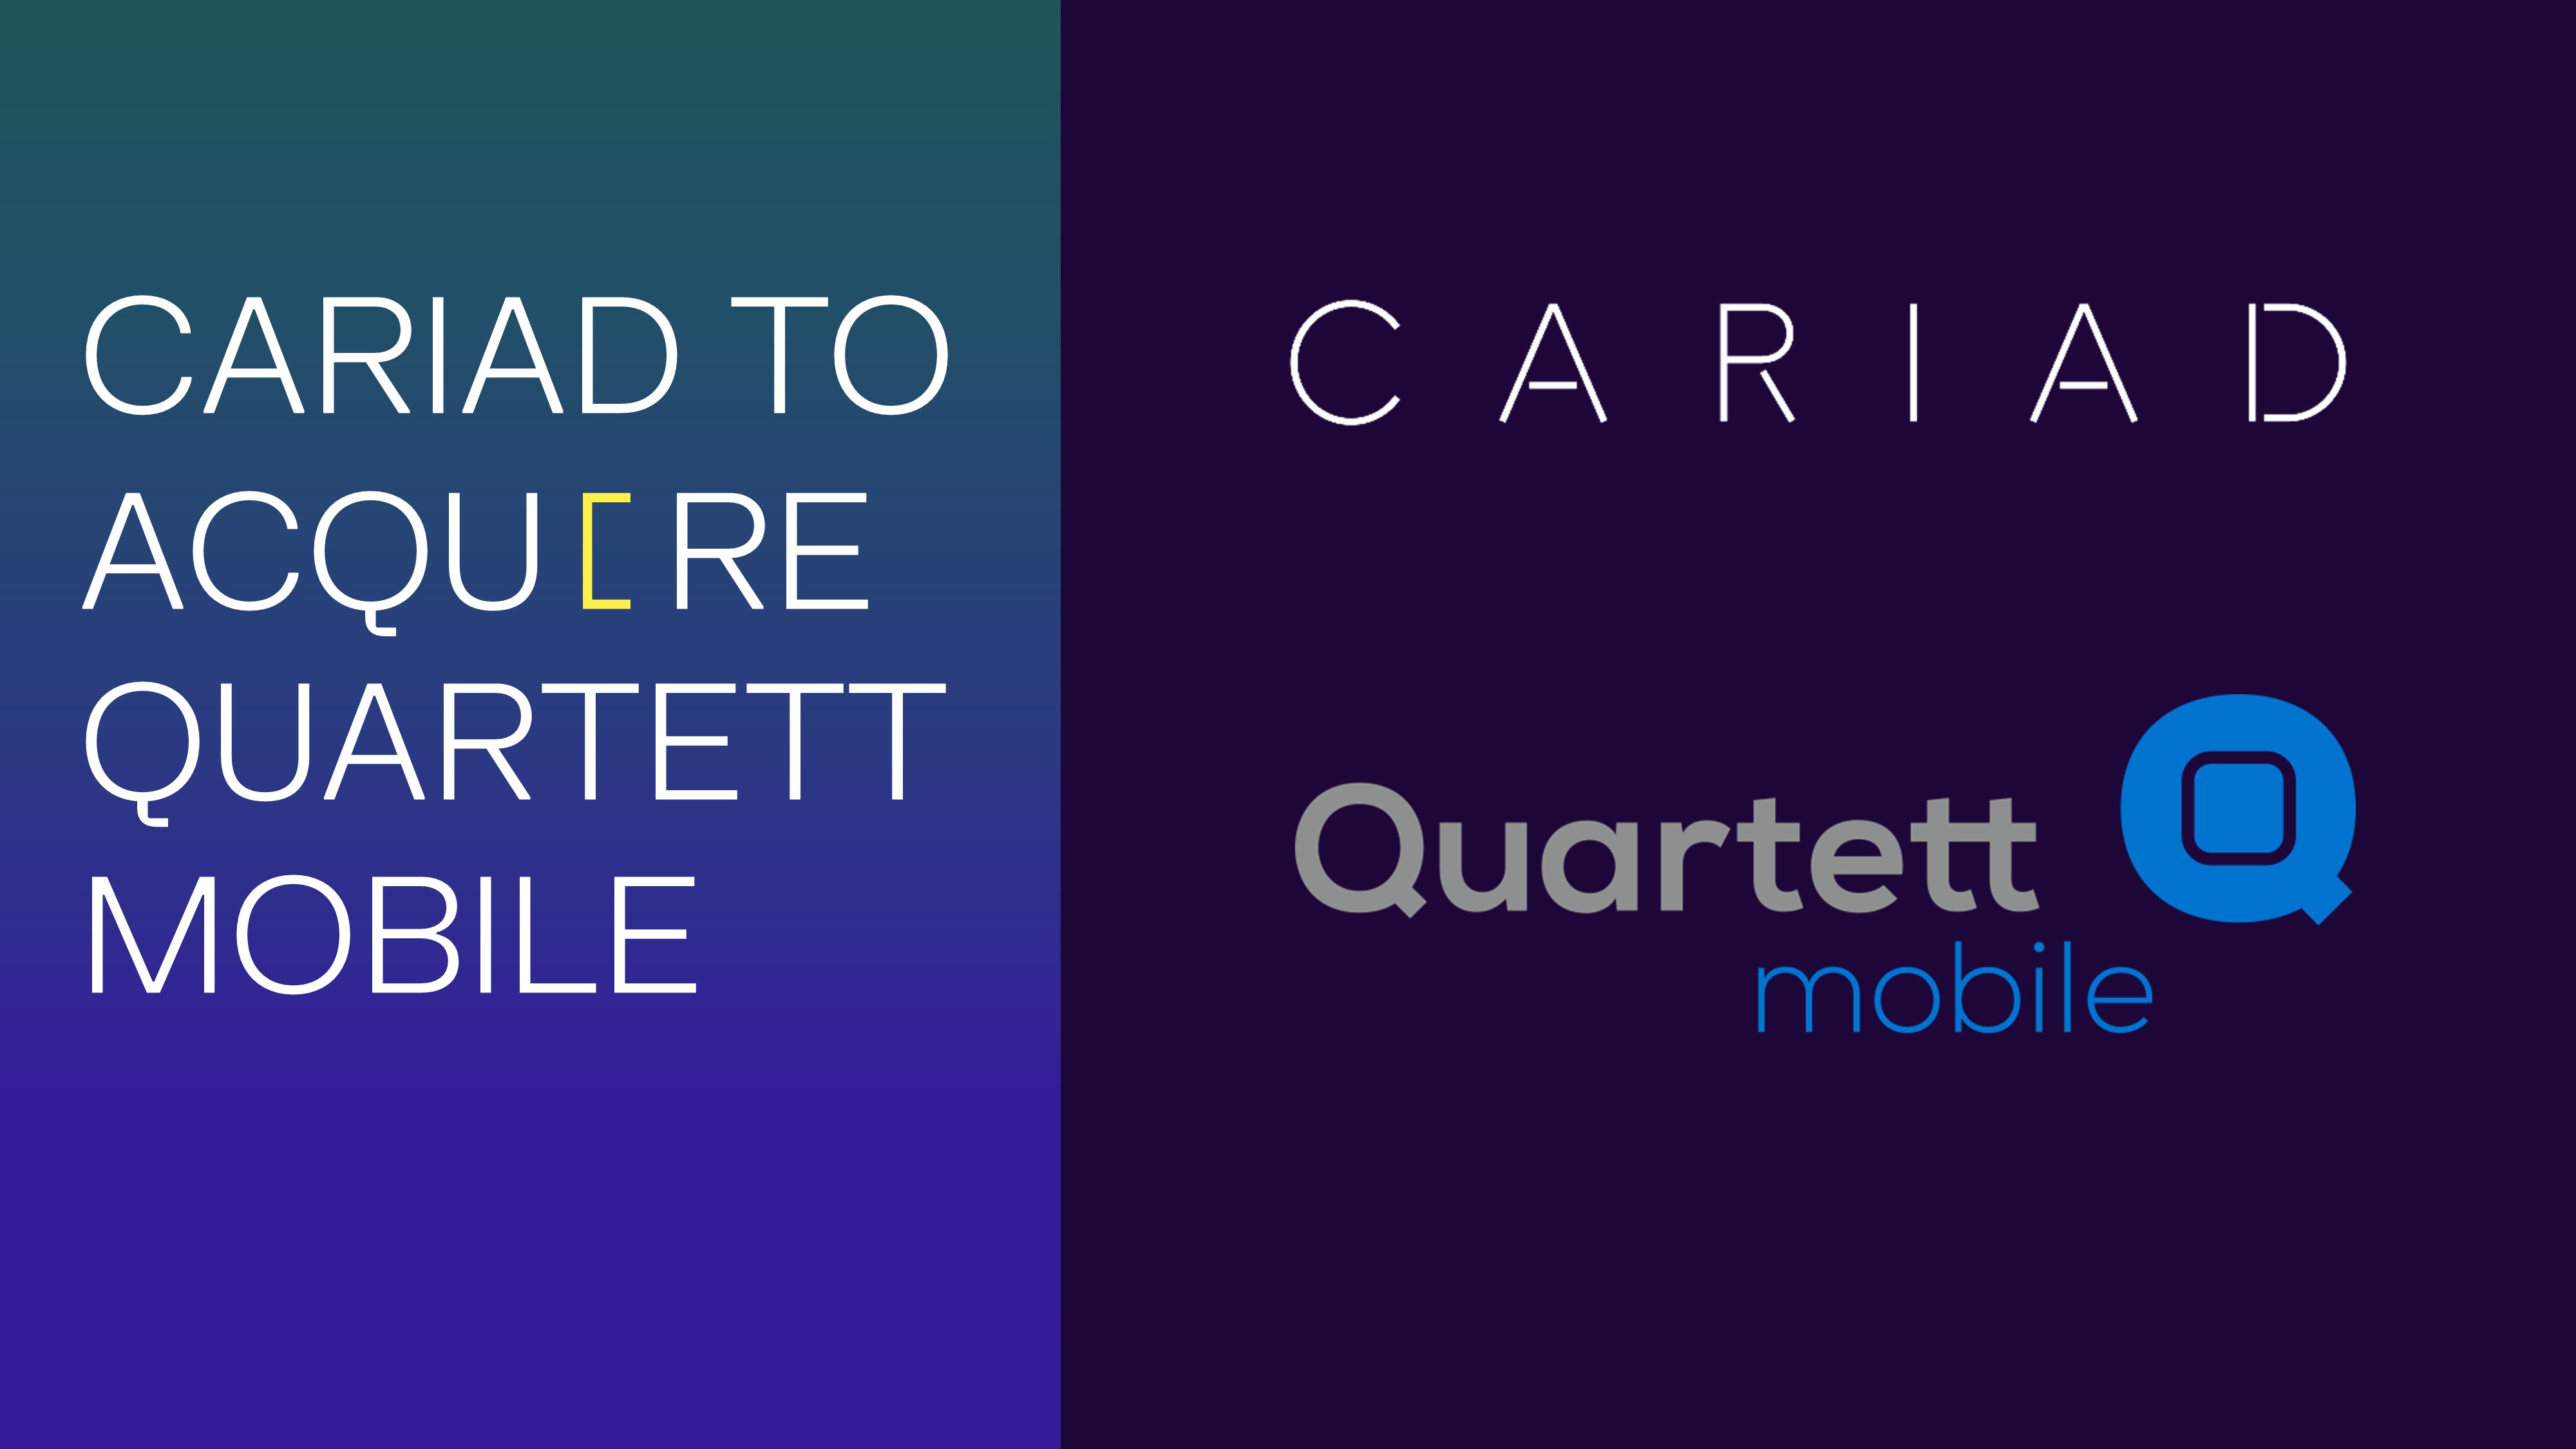 CARIAD to acquire Quartett mobile